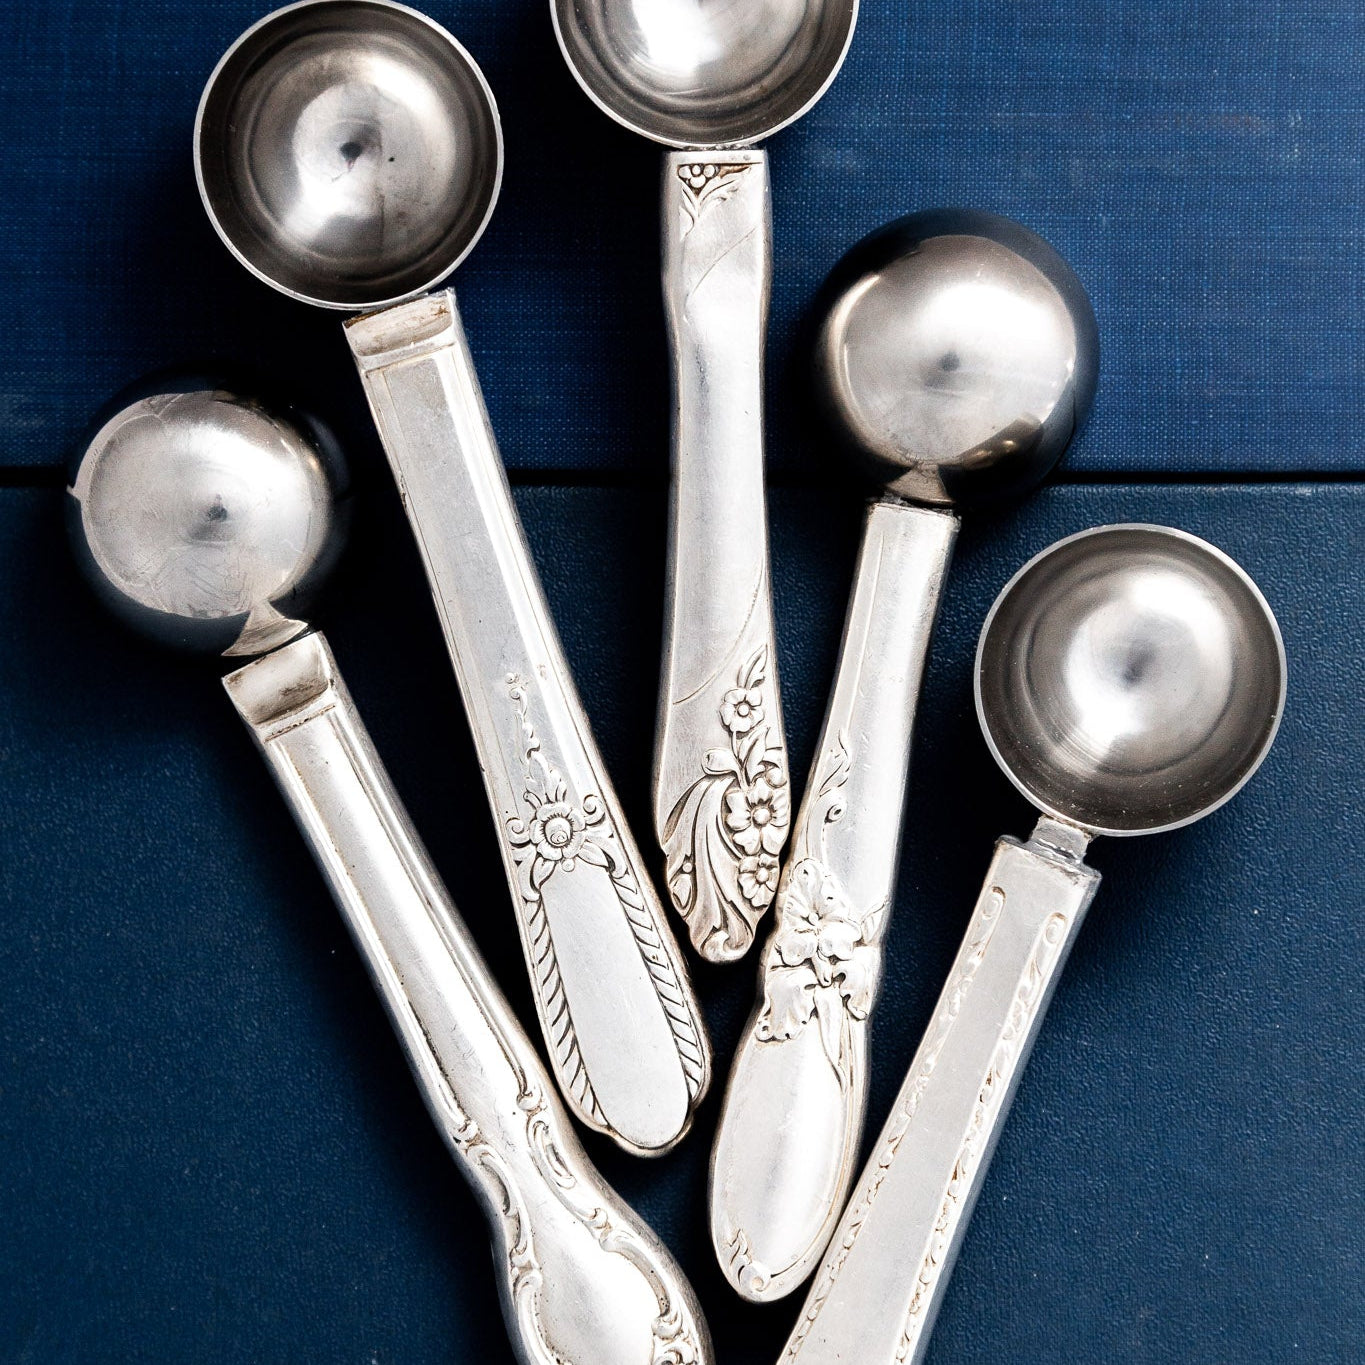 White Orchid 1953, Tea Scoop, Vintage Silverware Spoons callistafaye   